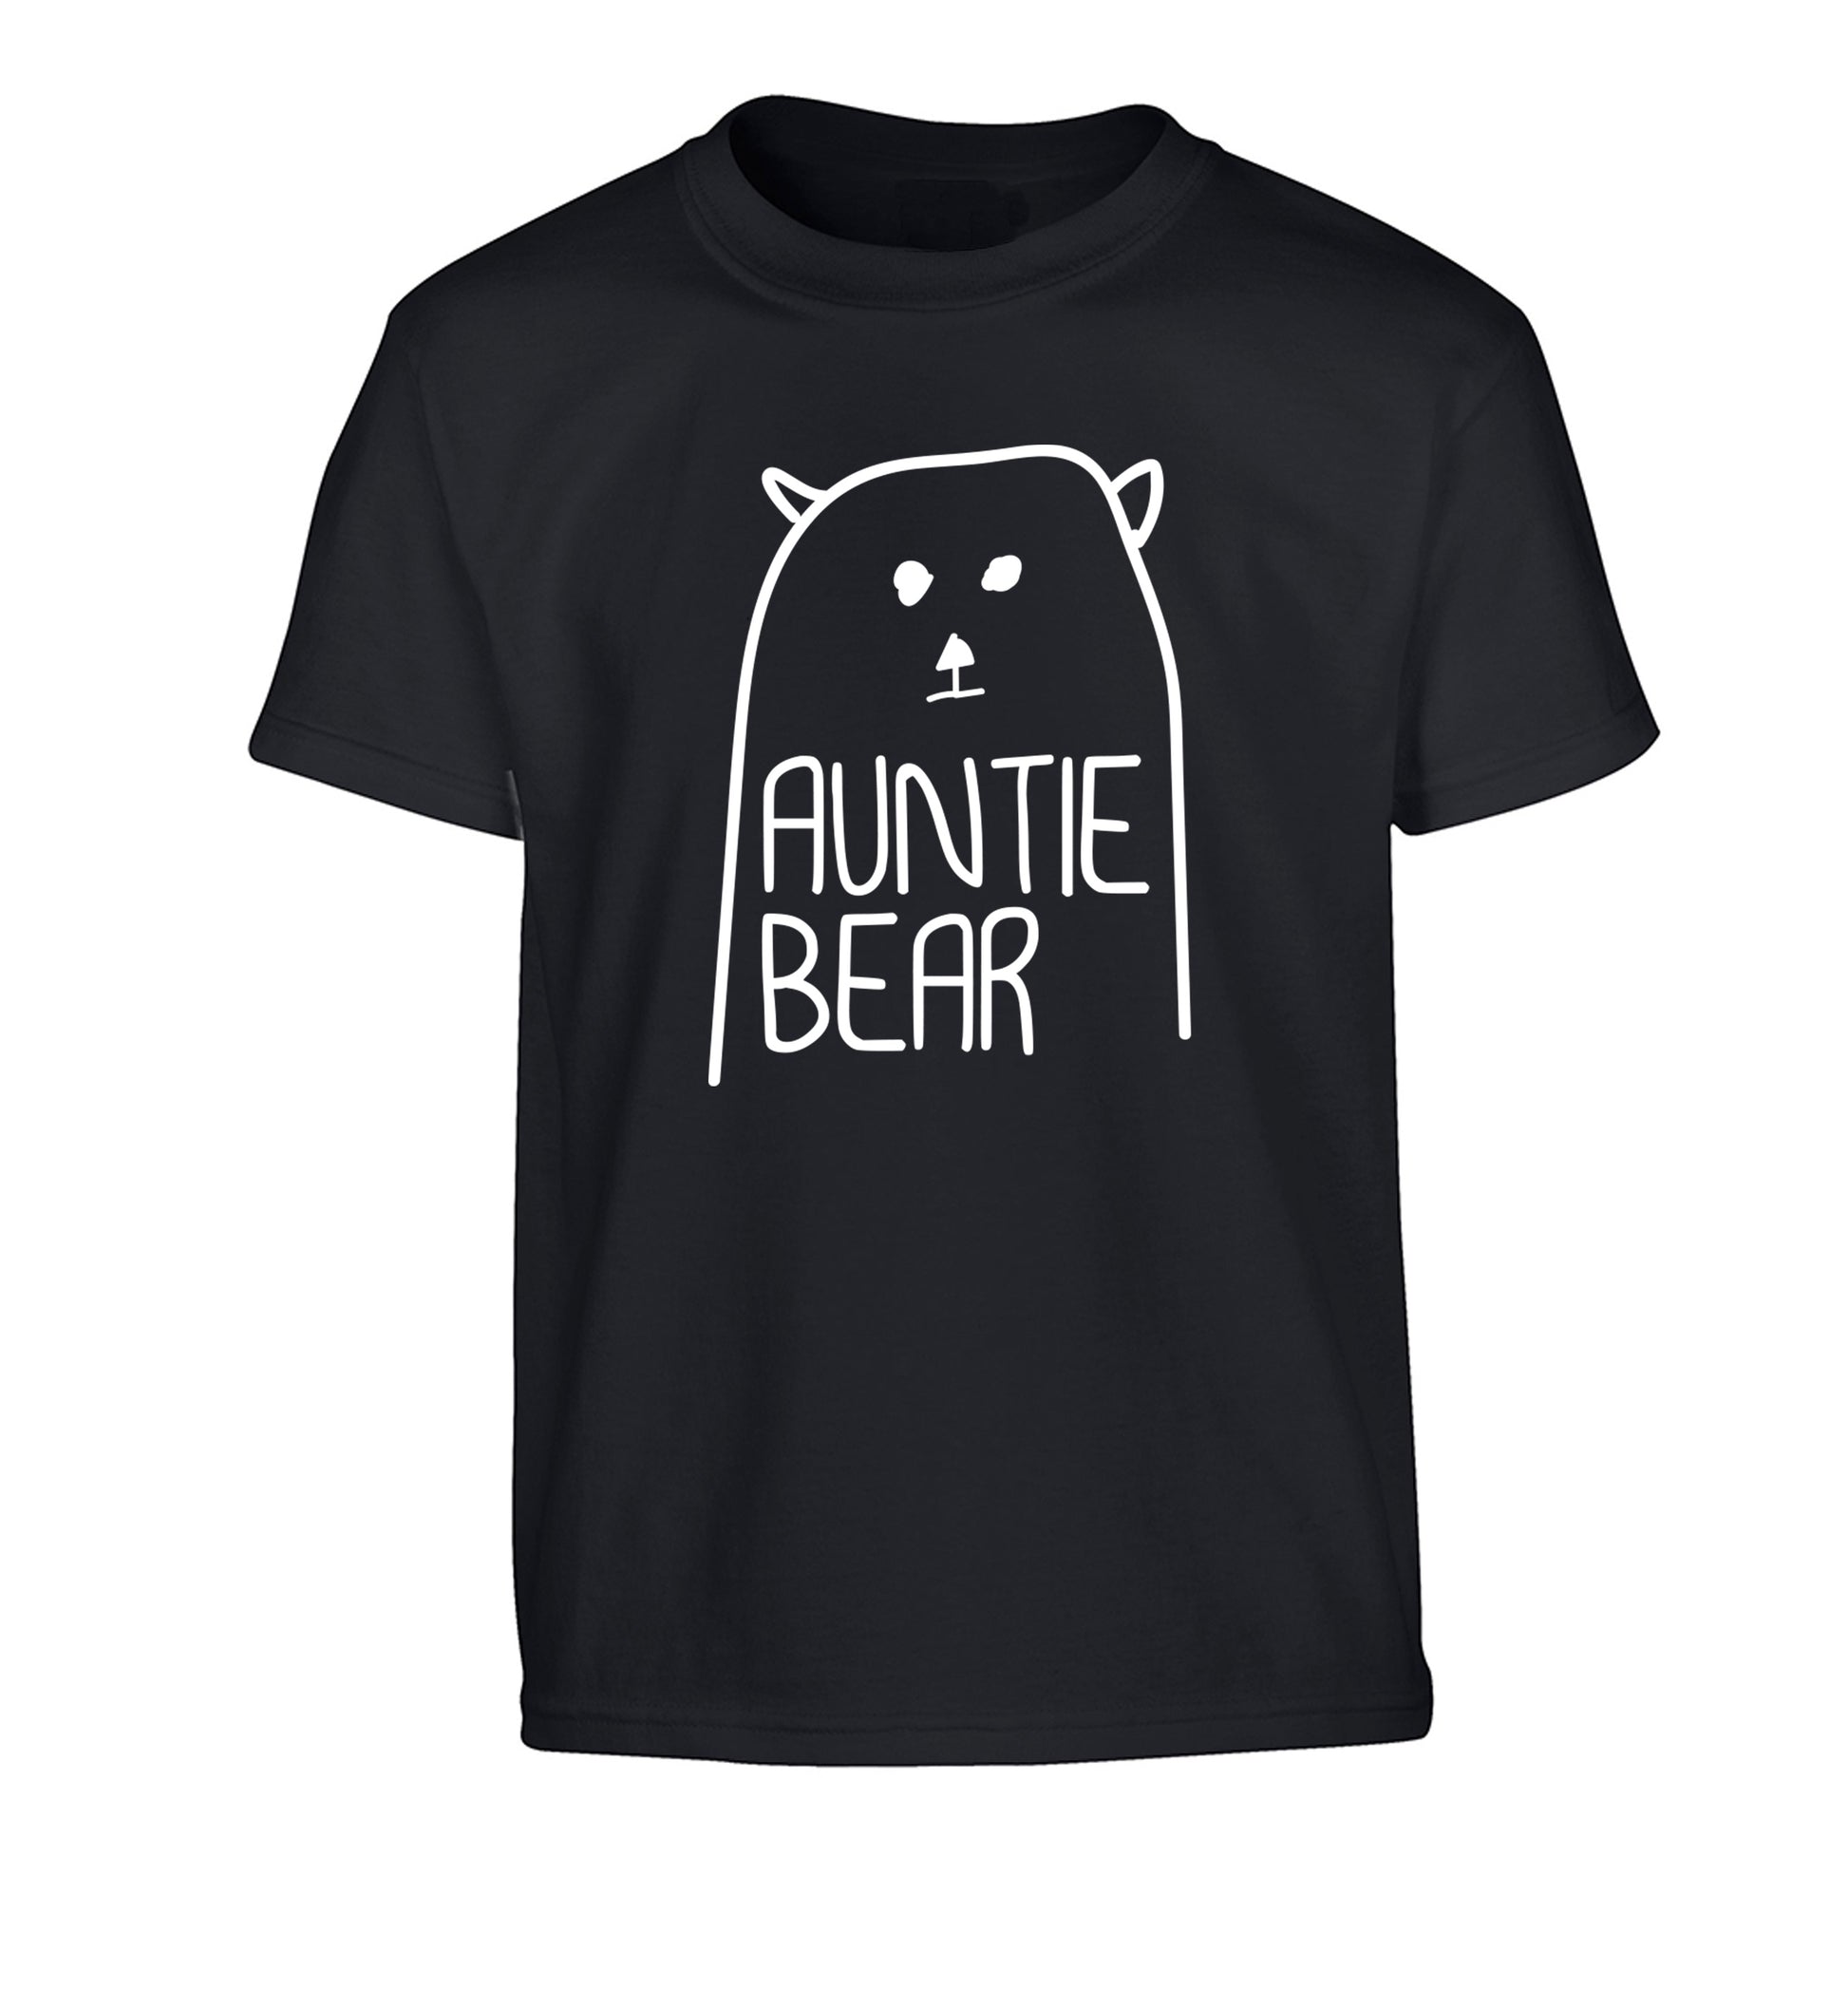 Auntie bear Children's black Tshirt 12-13 Years